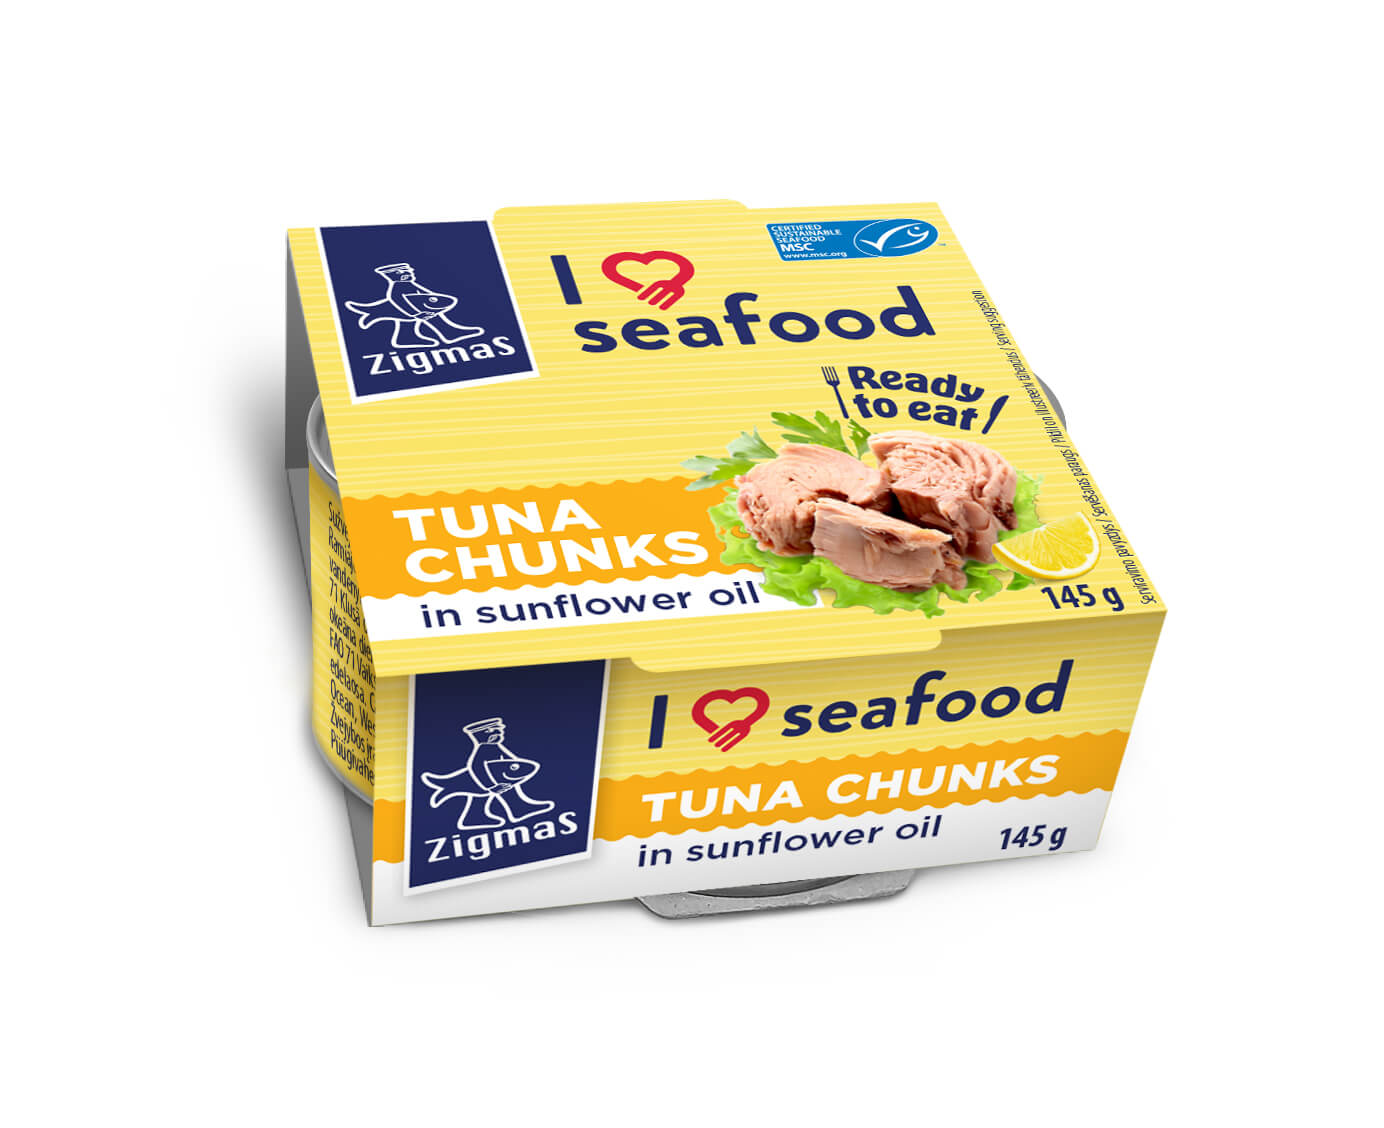 Tuna chunks in sunflower oil